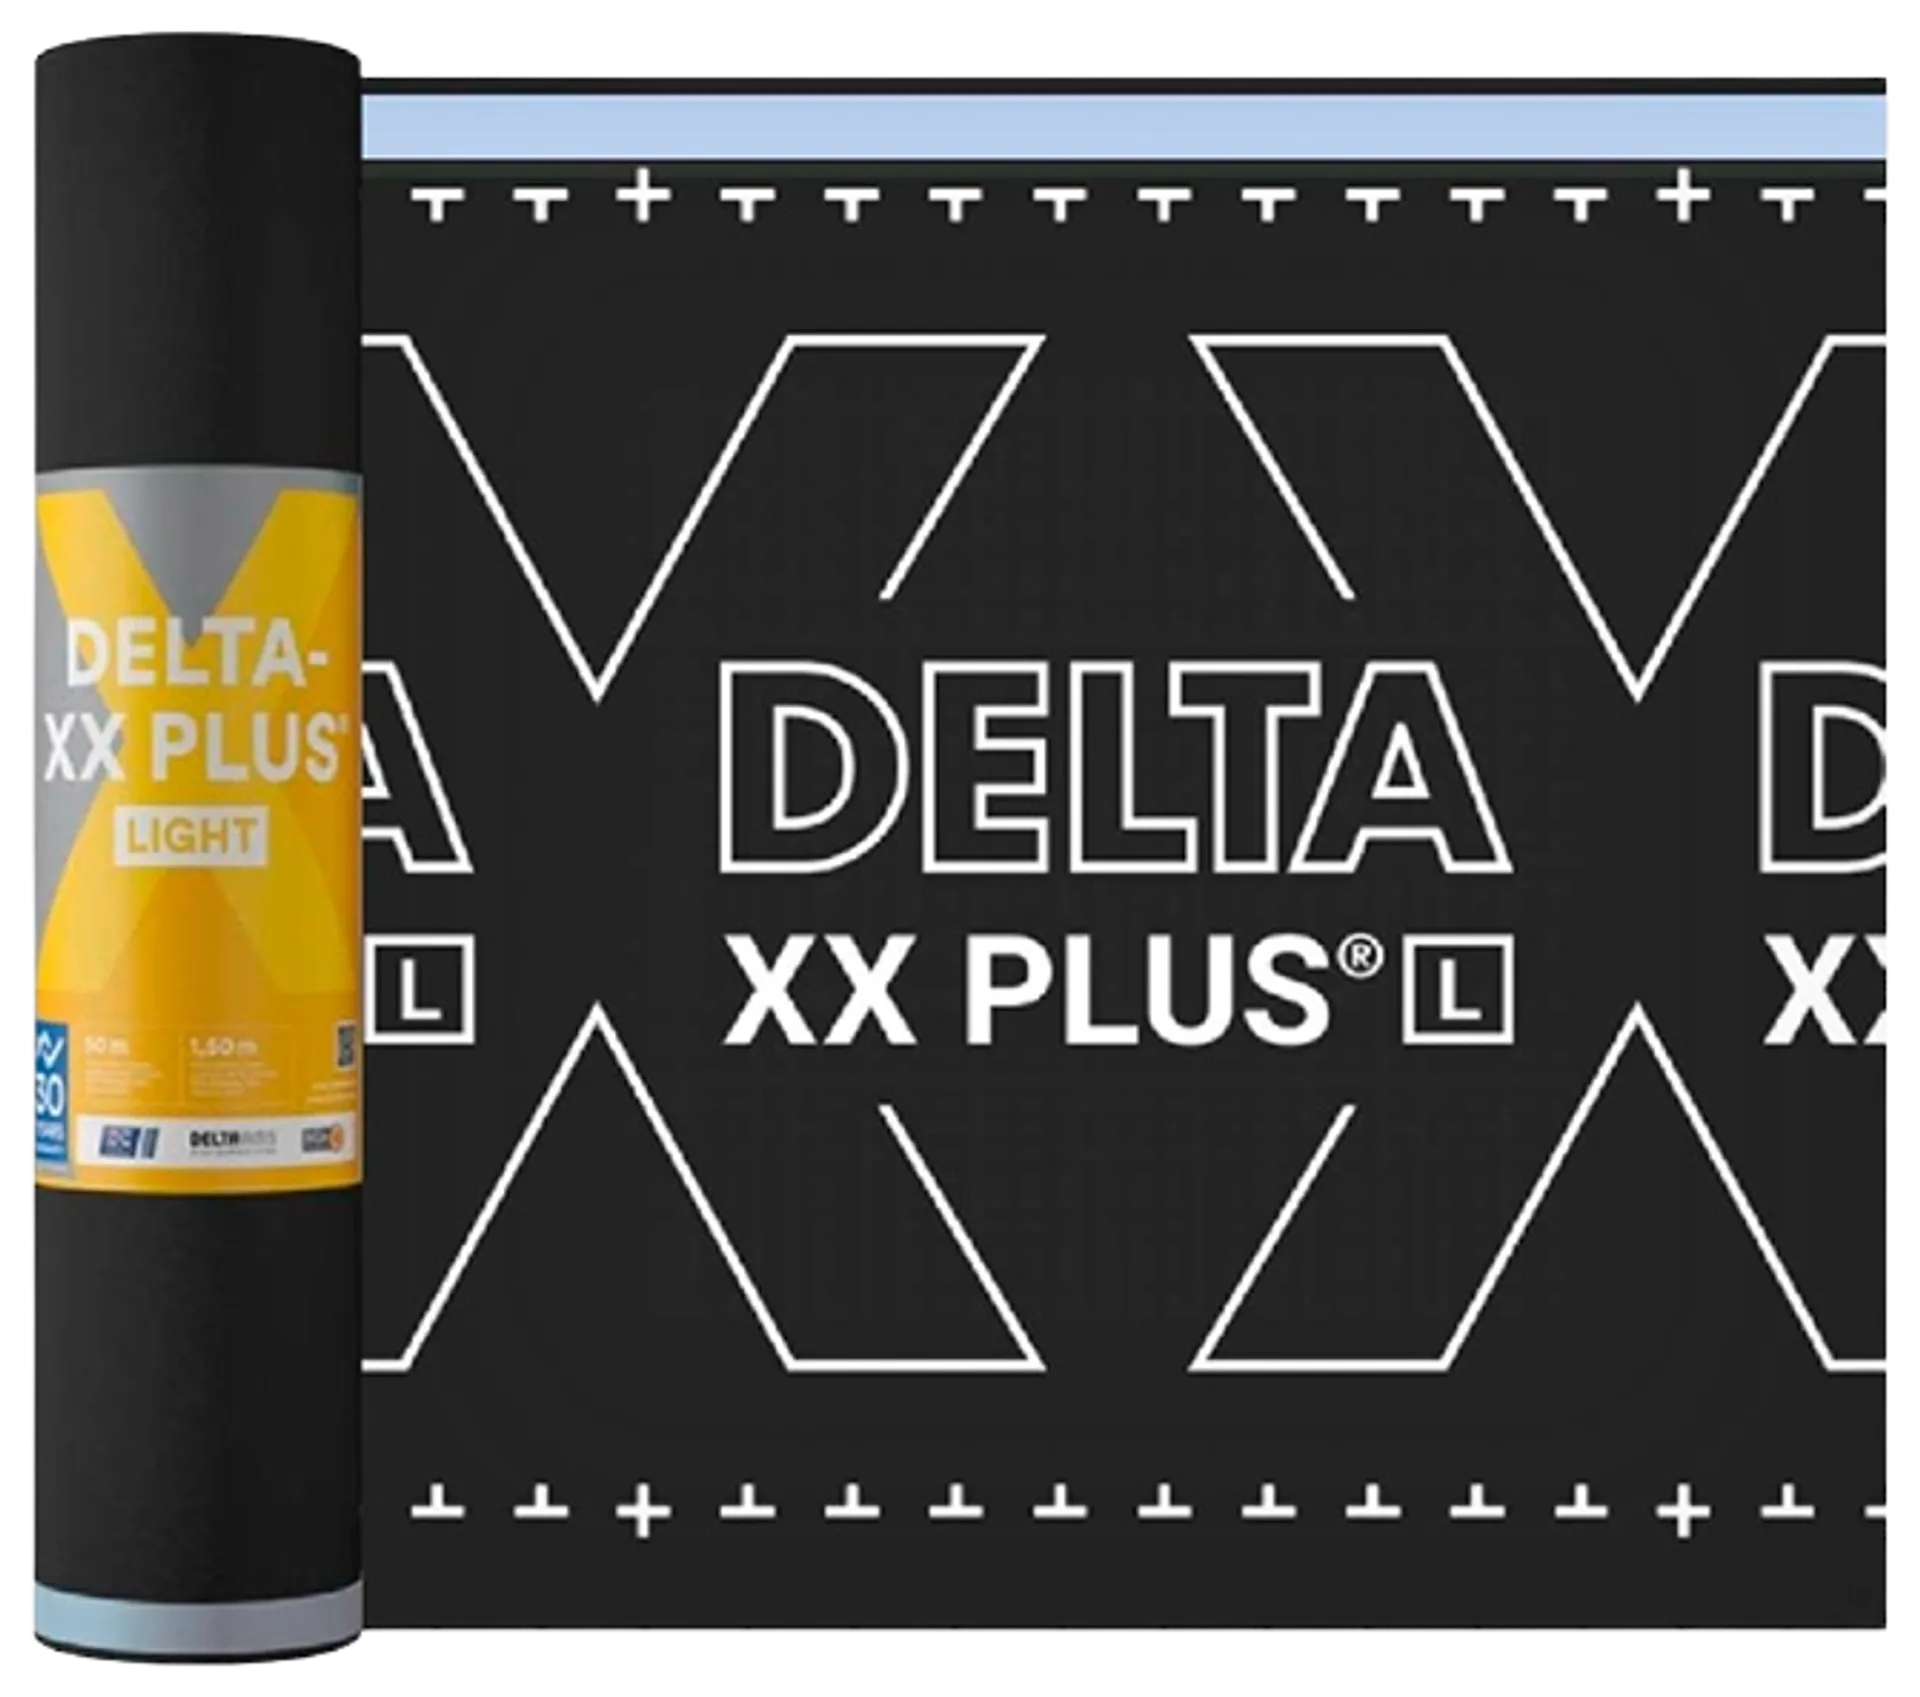 Delta aluskate XX Plus Light 1,5 x 50m - 1